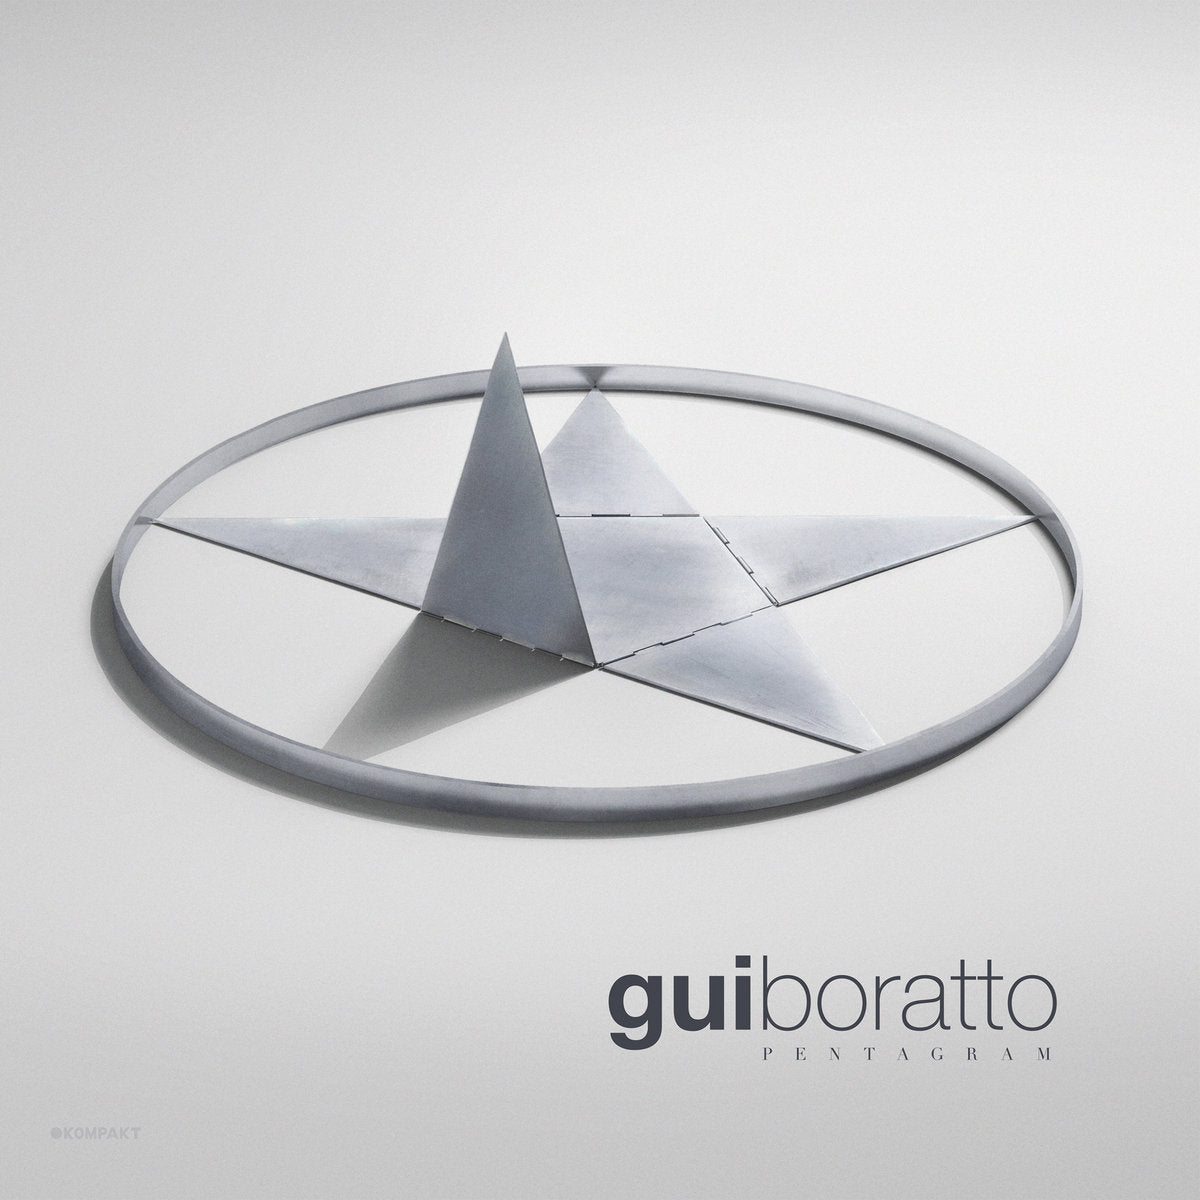 Gui Boratto - Pentagram [Kompakt]